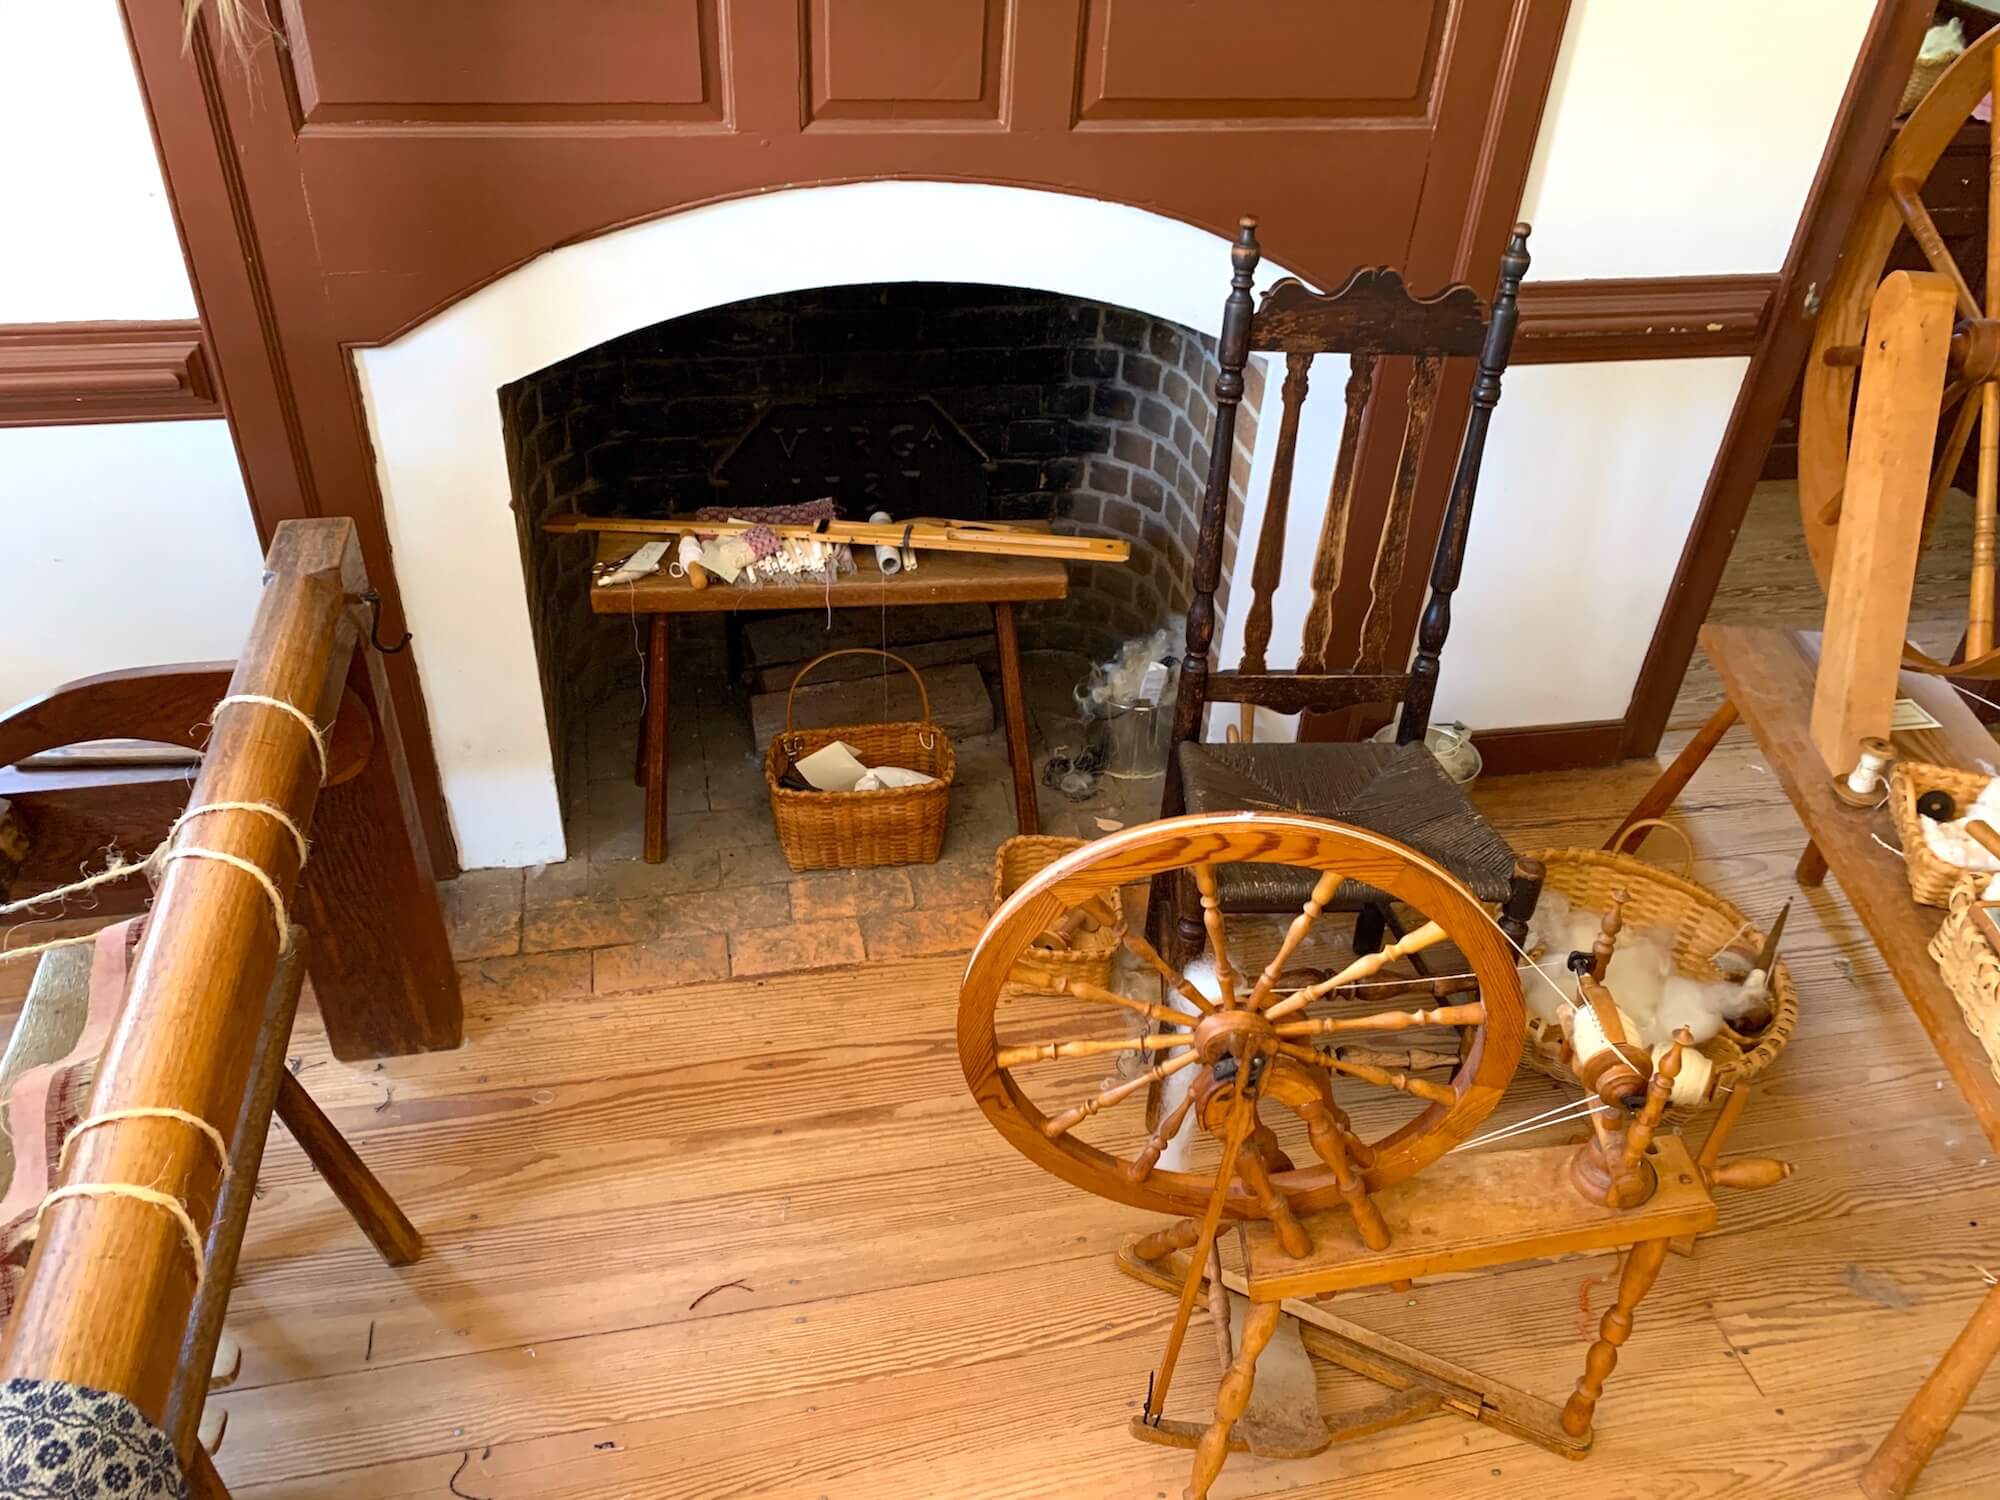 Fireplace and loom Weaver's Shop Colonial Williamsburg I MemorableWomensTravel.com